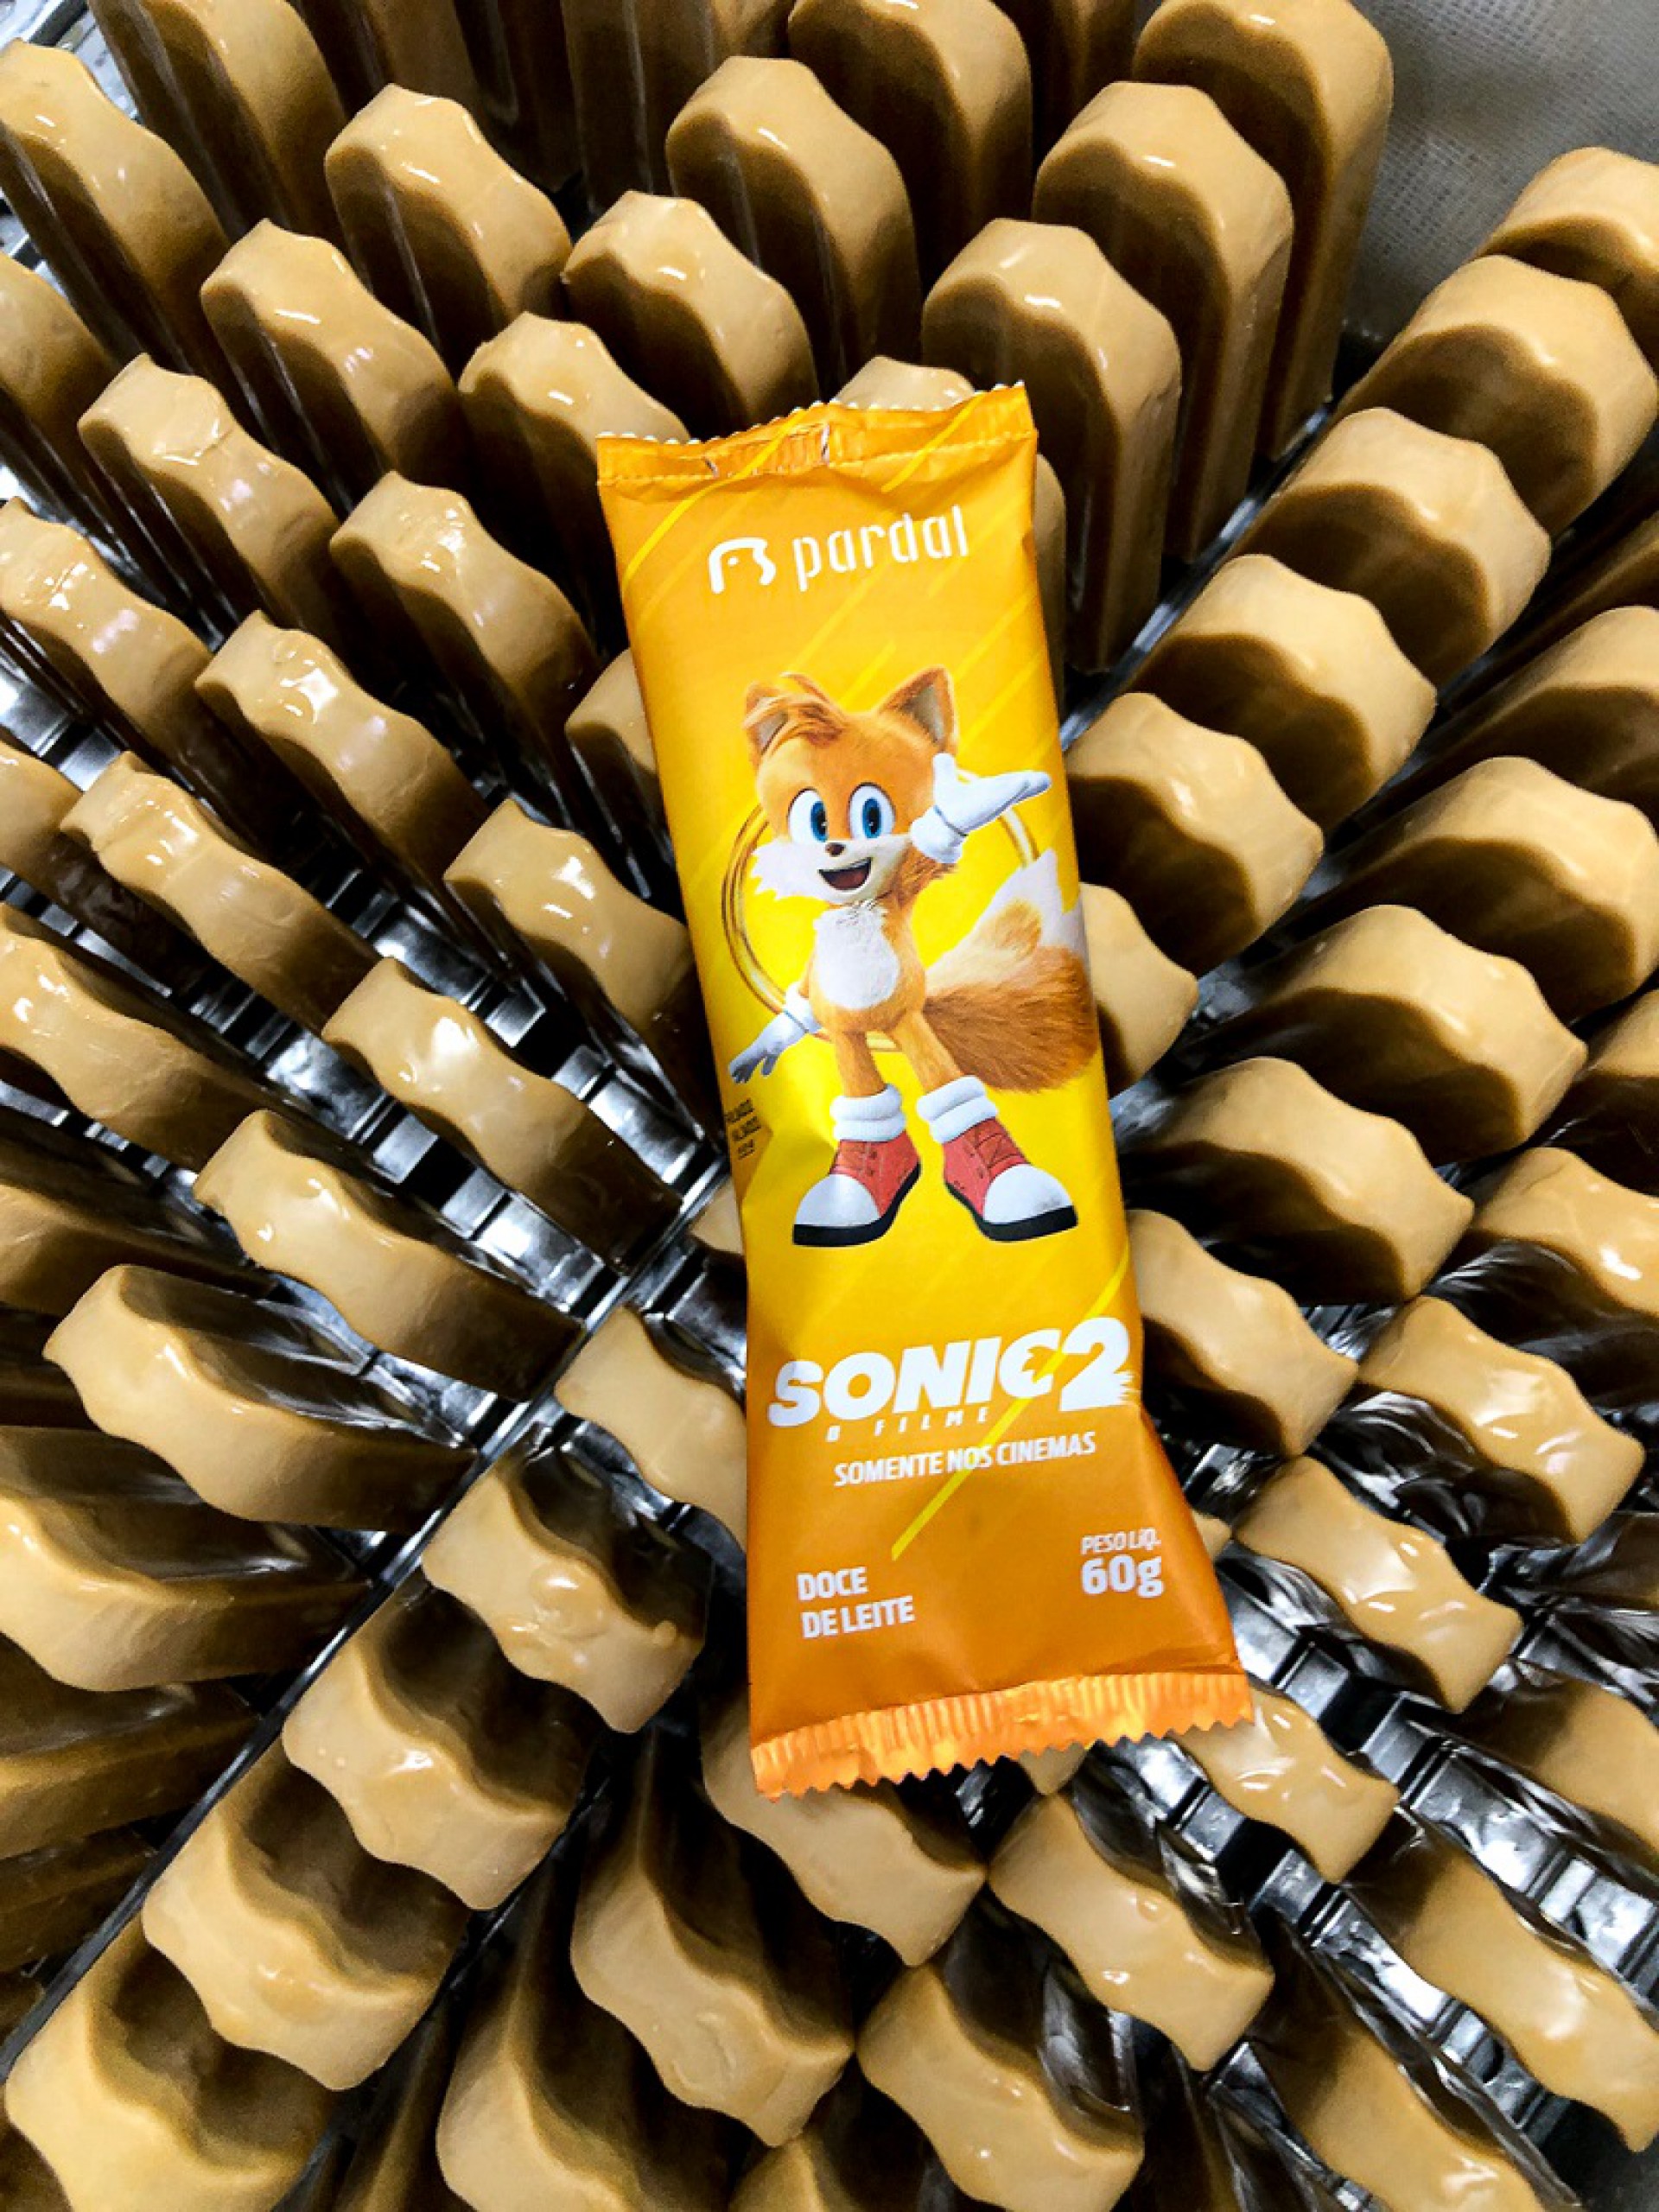 Pardal Sorvetes lança embalagem exclusiva para 'Sonic - O Filme